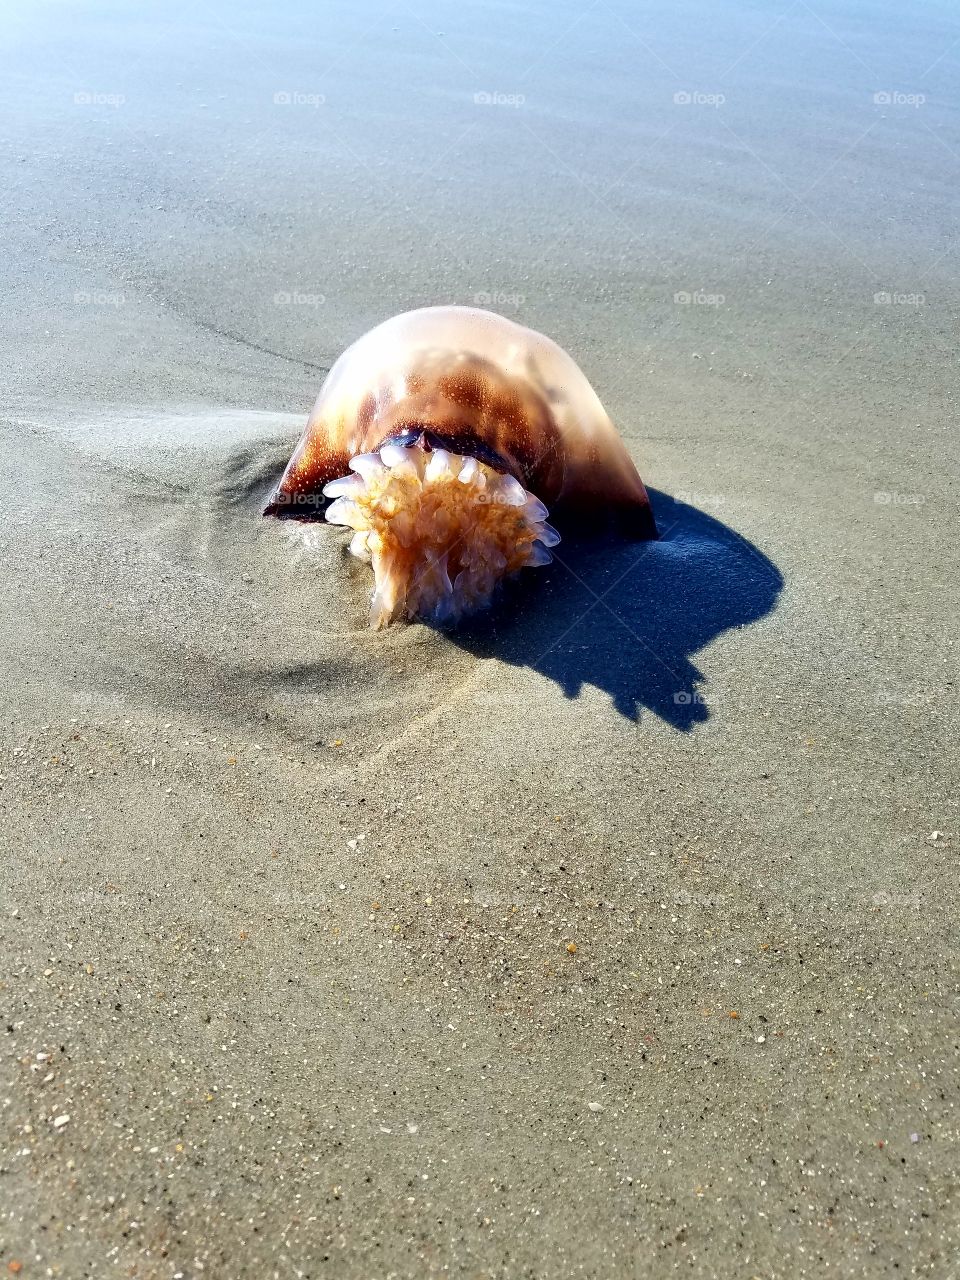 Jellyfish by the Seashore